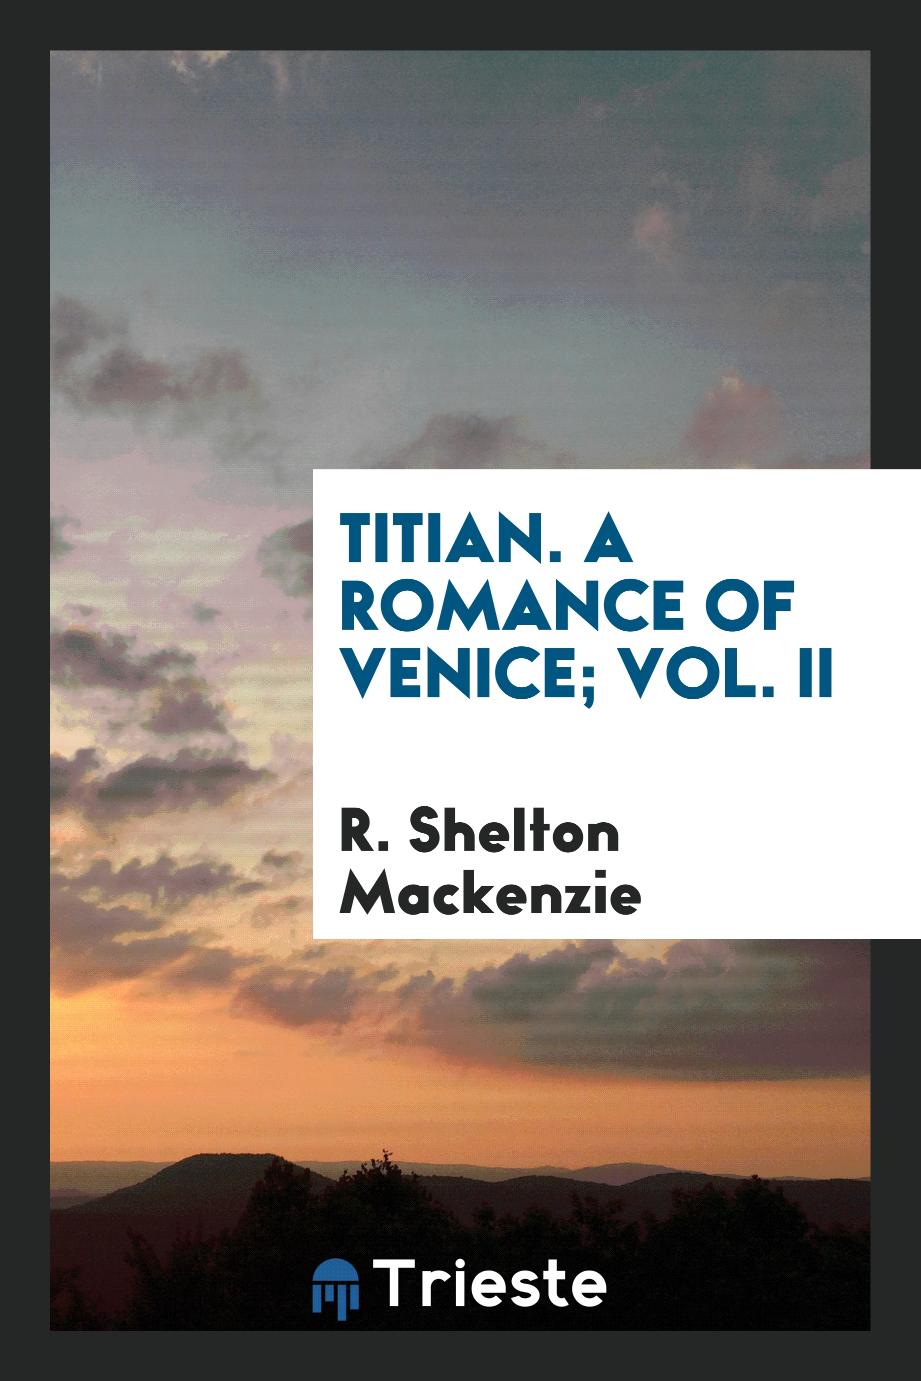 Titian. A romance of Venice; Vol. II